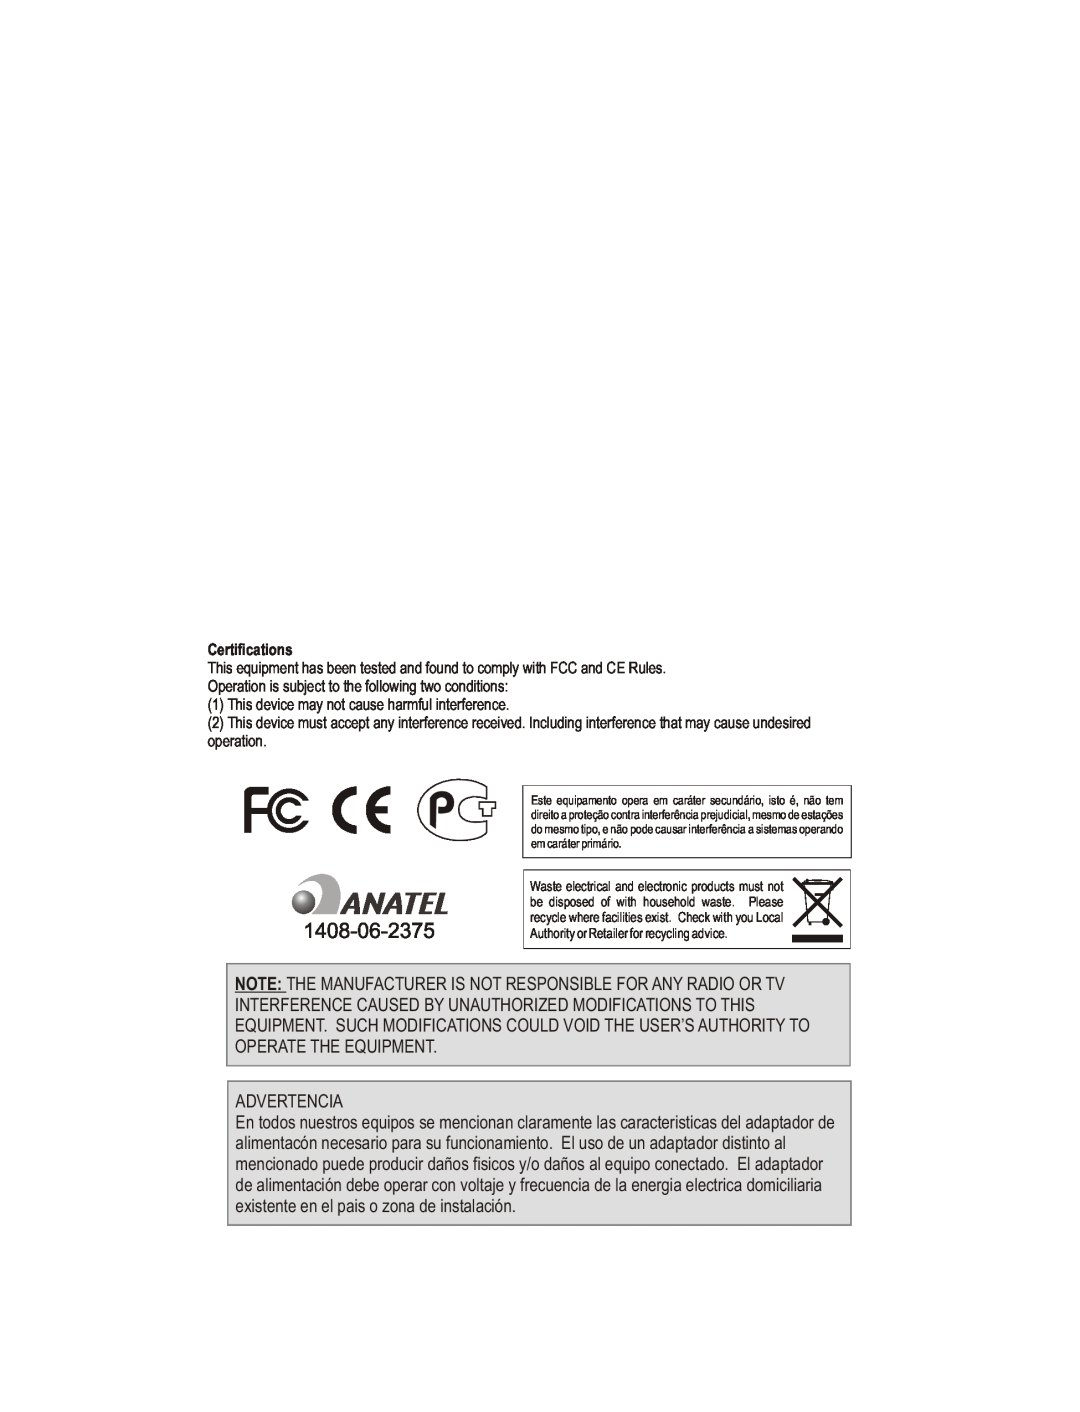 TRENDnet Wireless Access Point manual Advertencia 